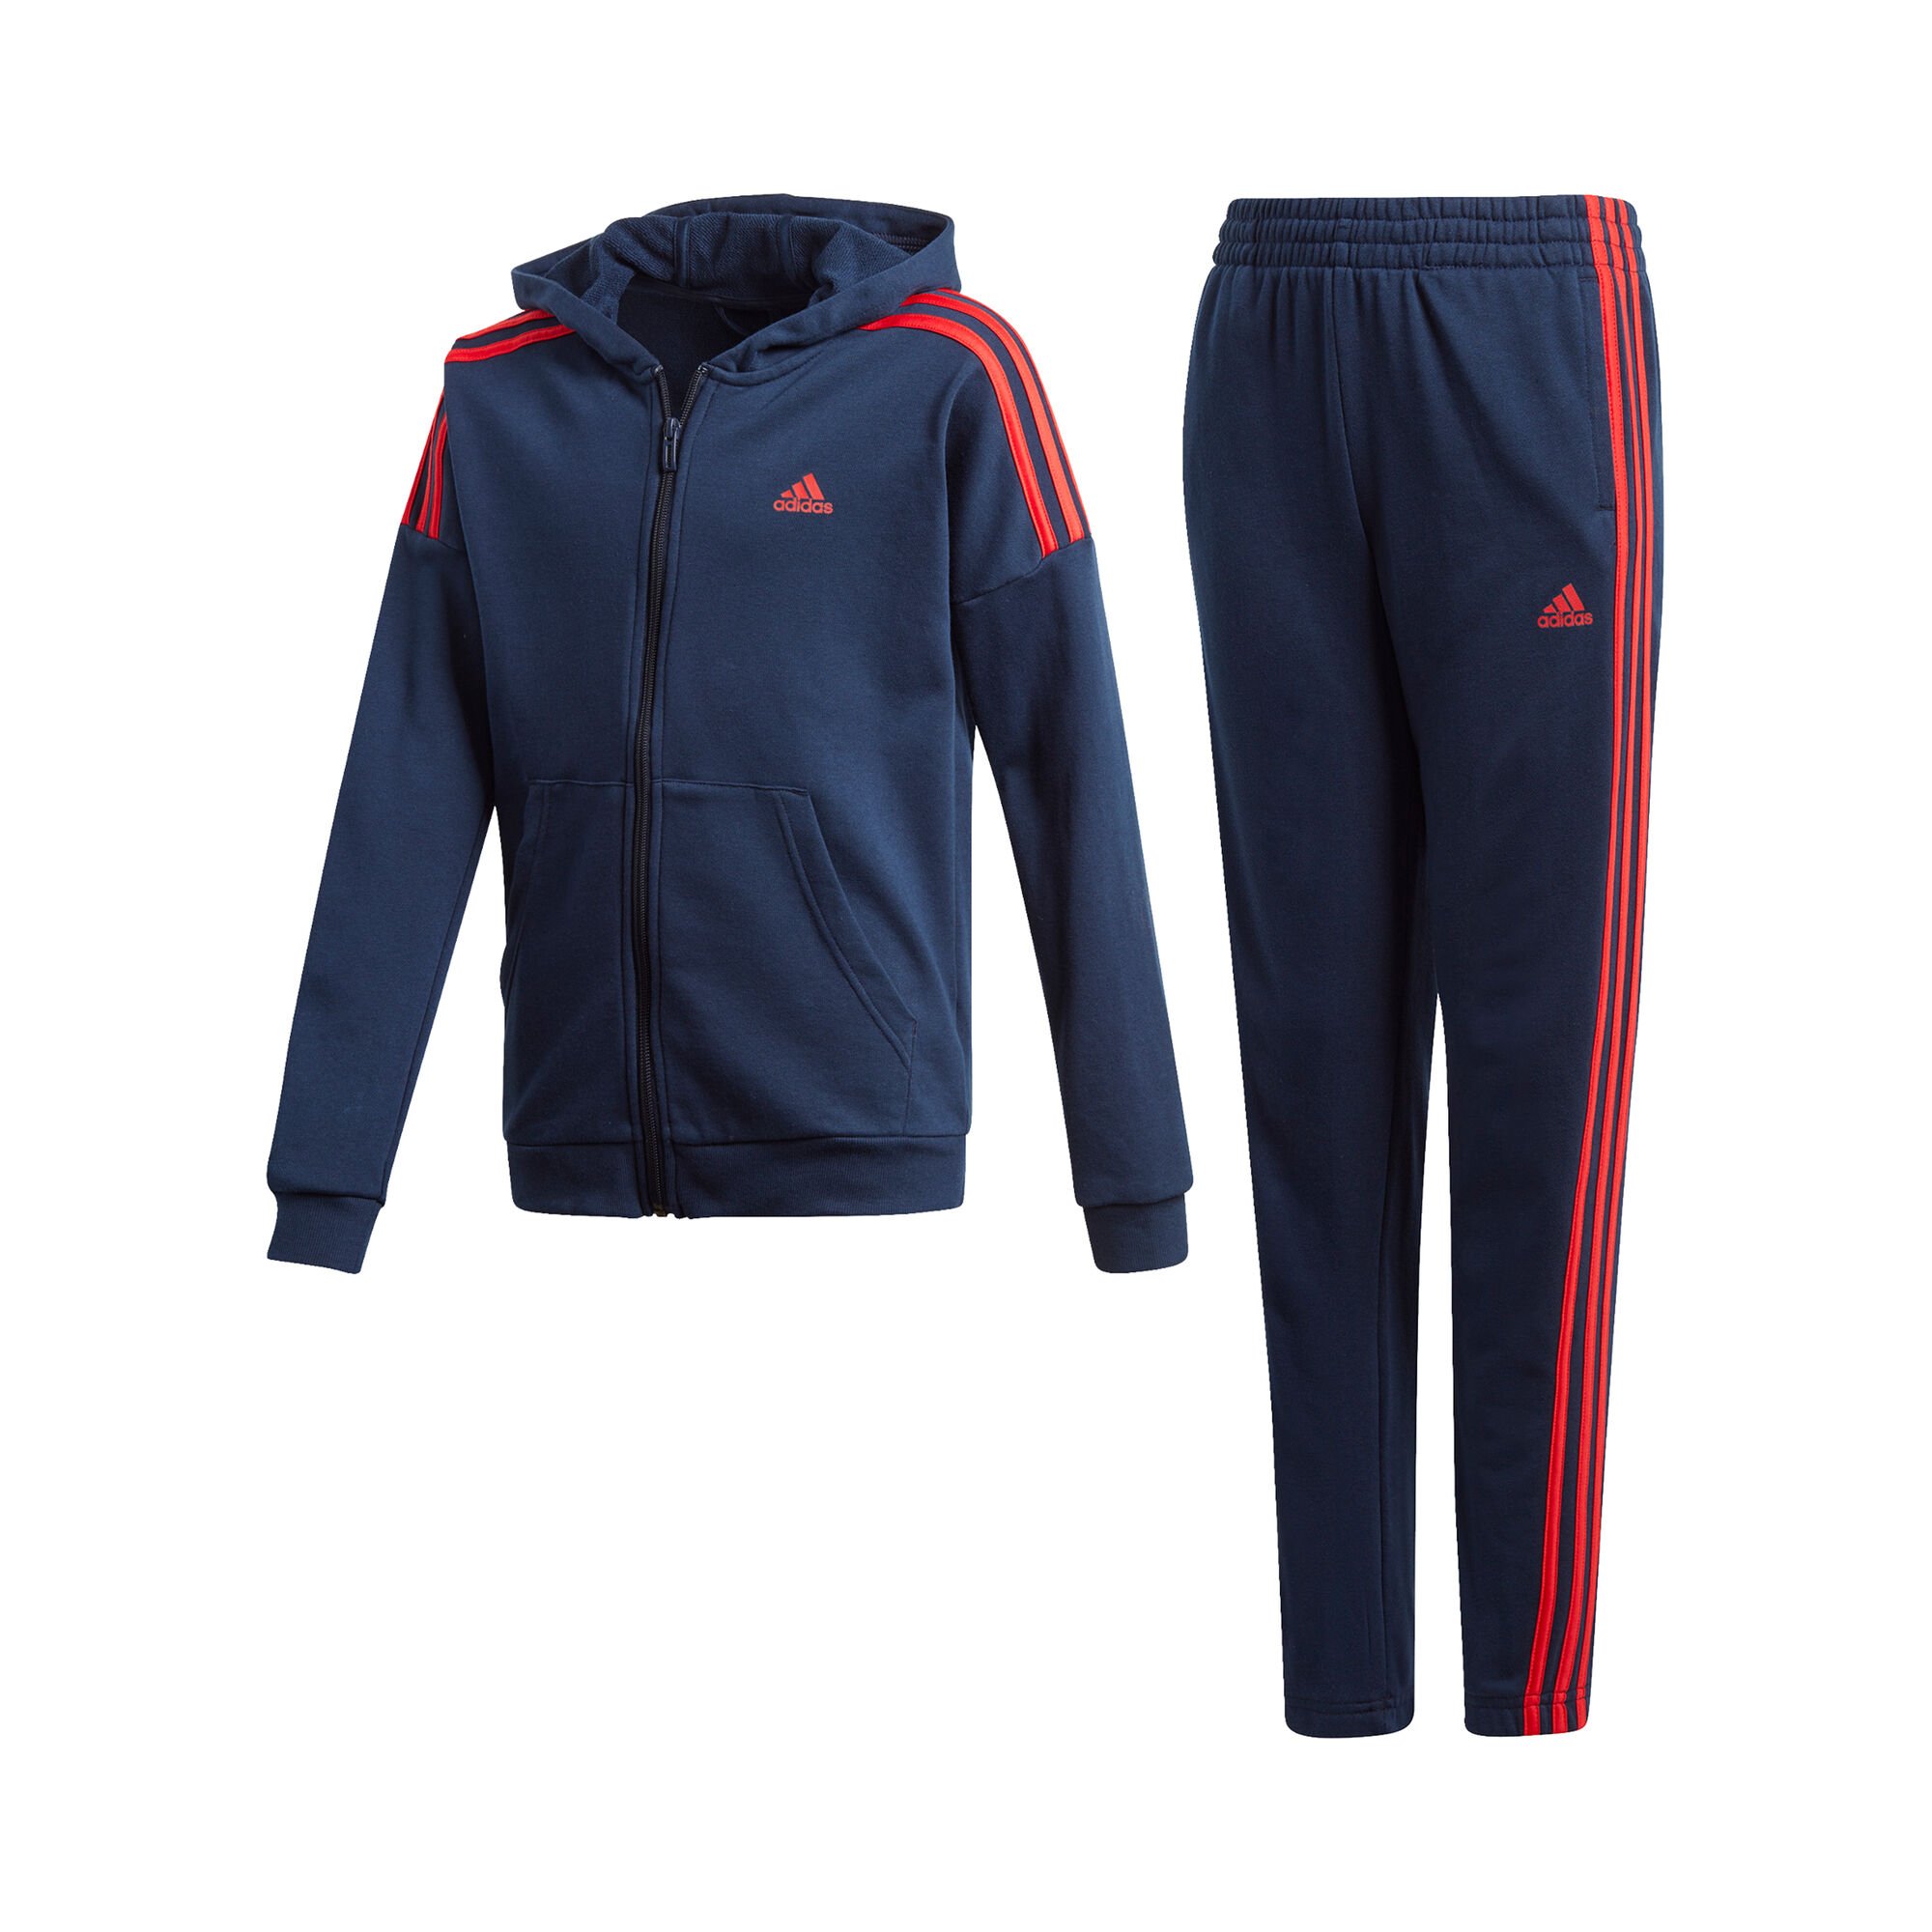 Buy adidas Tracksuit Boys Dark Blue, Red online | Tennis Point UK